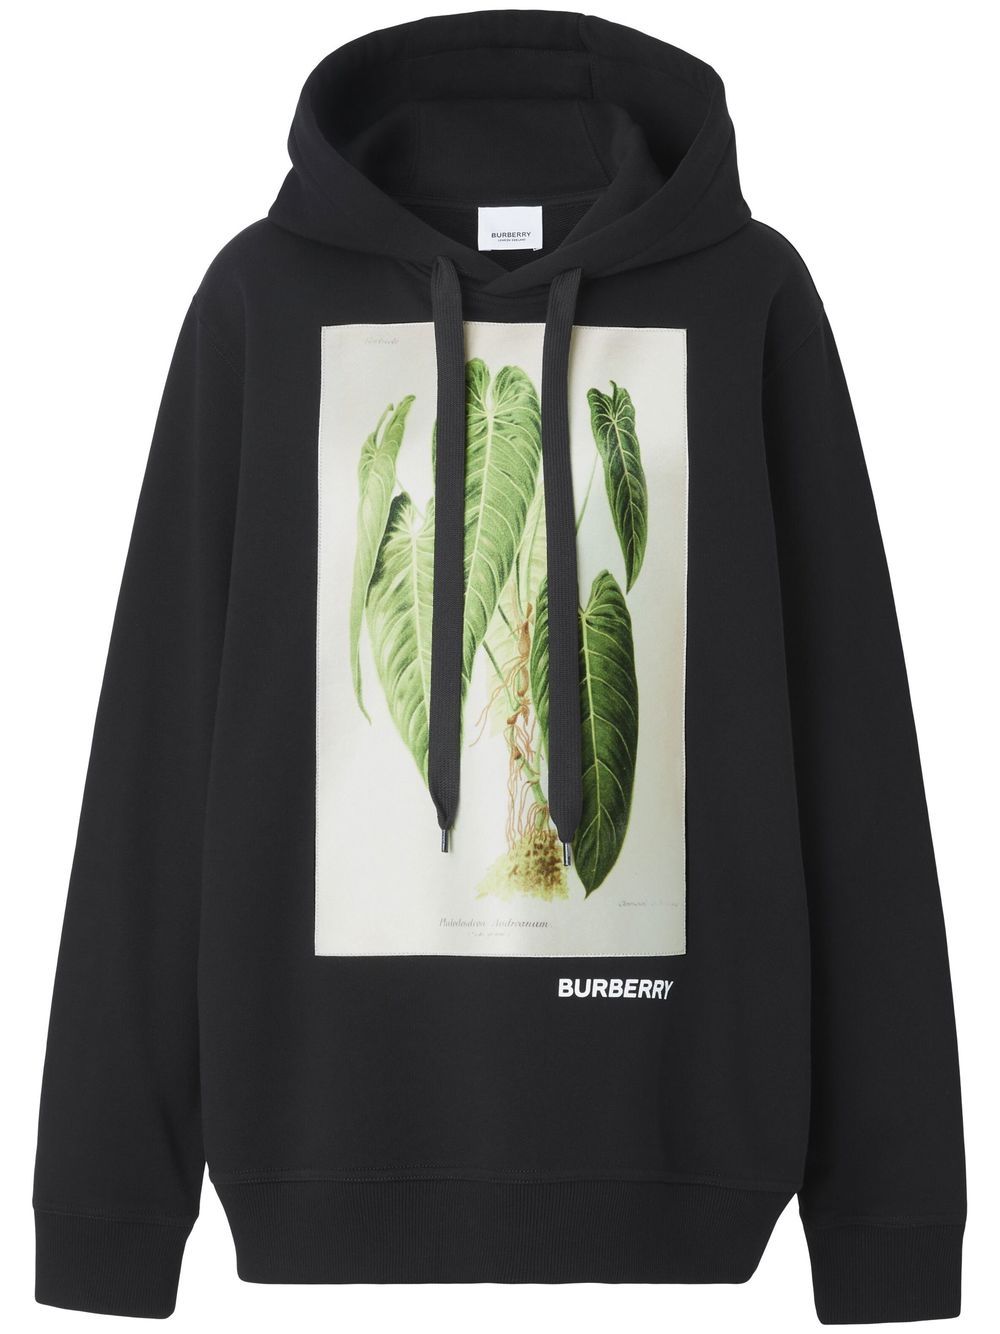 Burberry botanical sketch hoodie - Black von Burberry